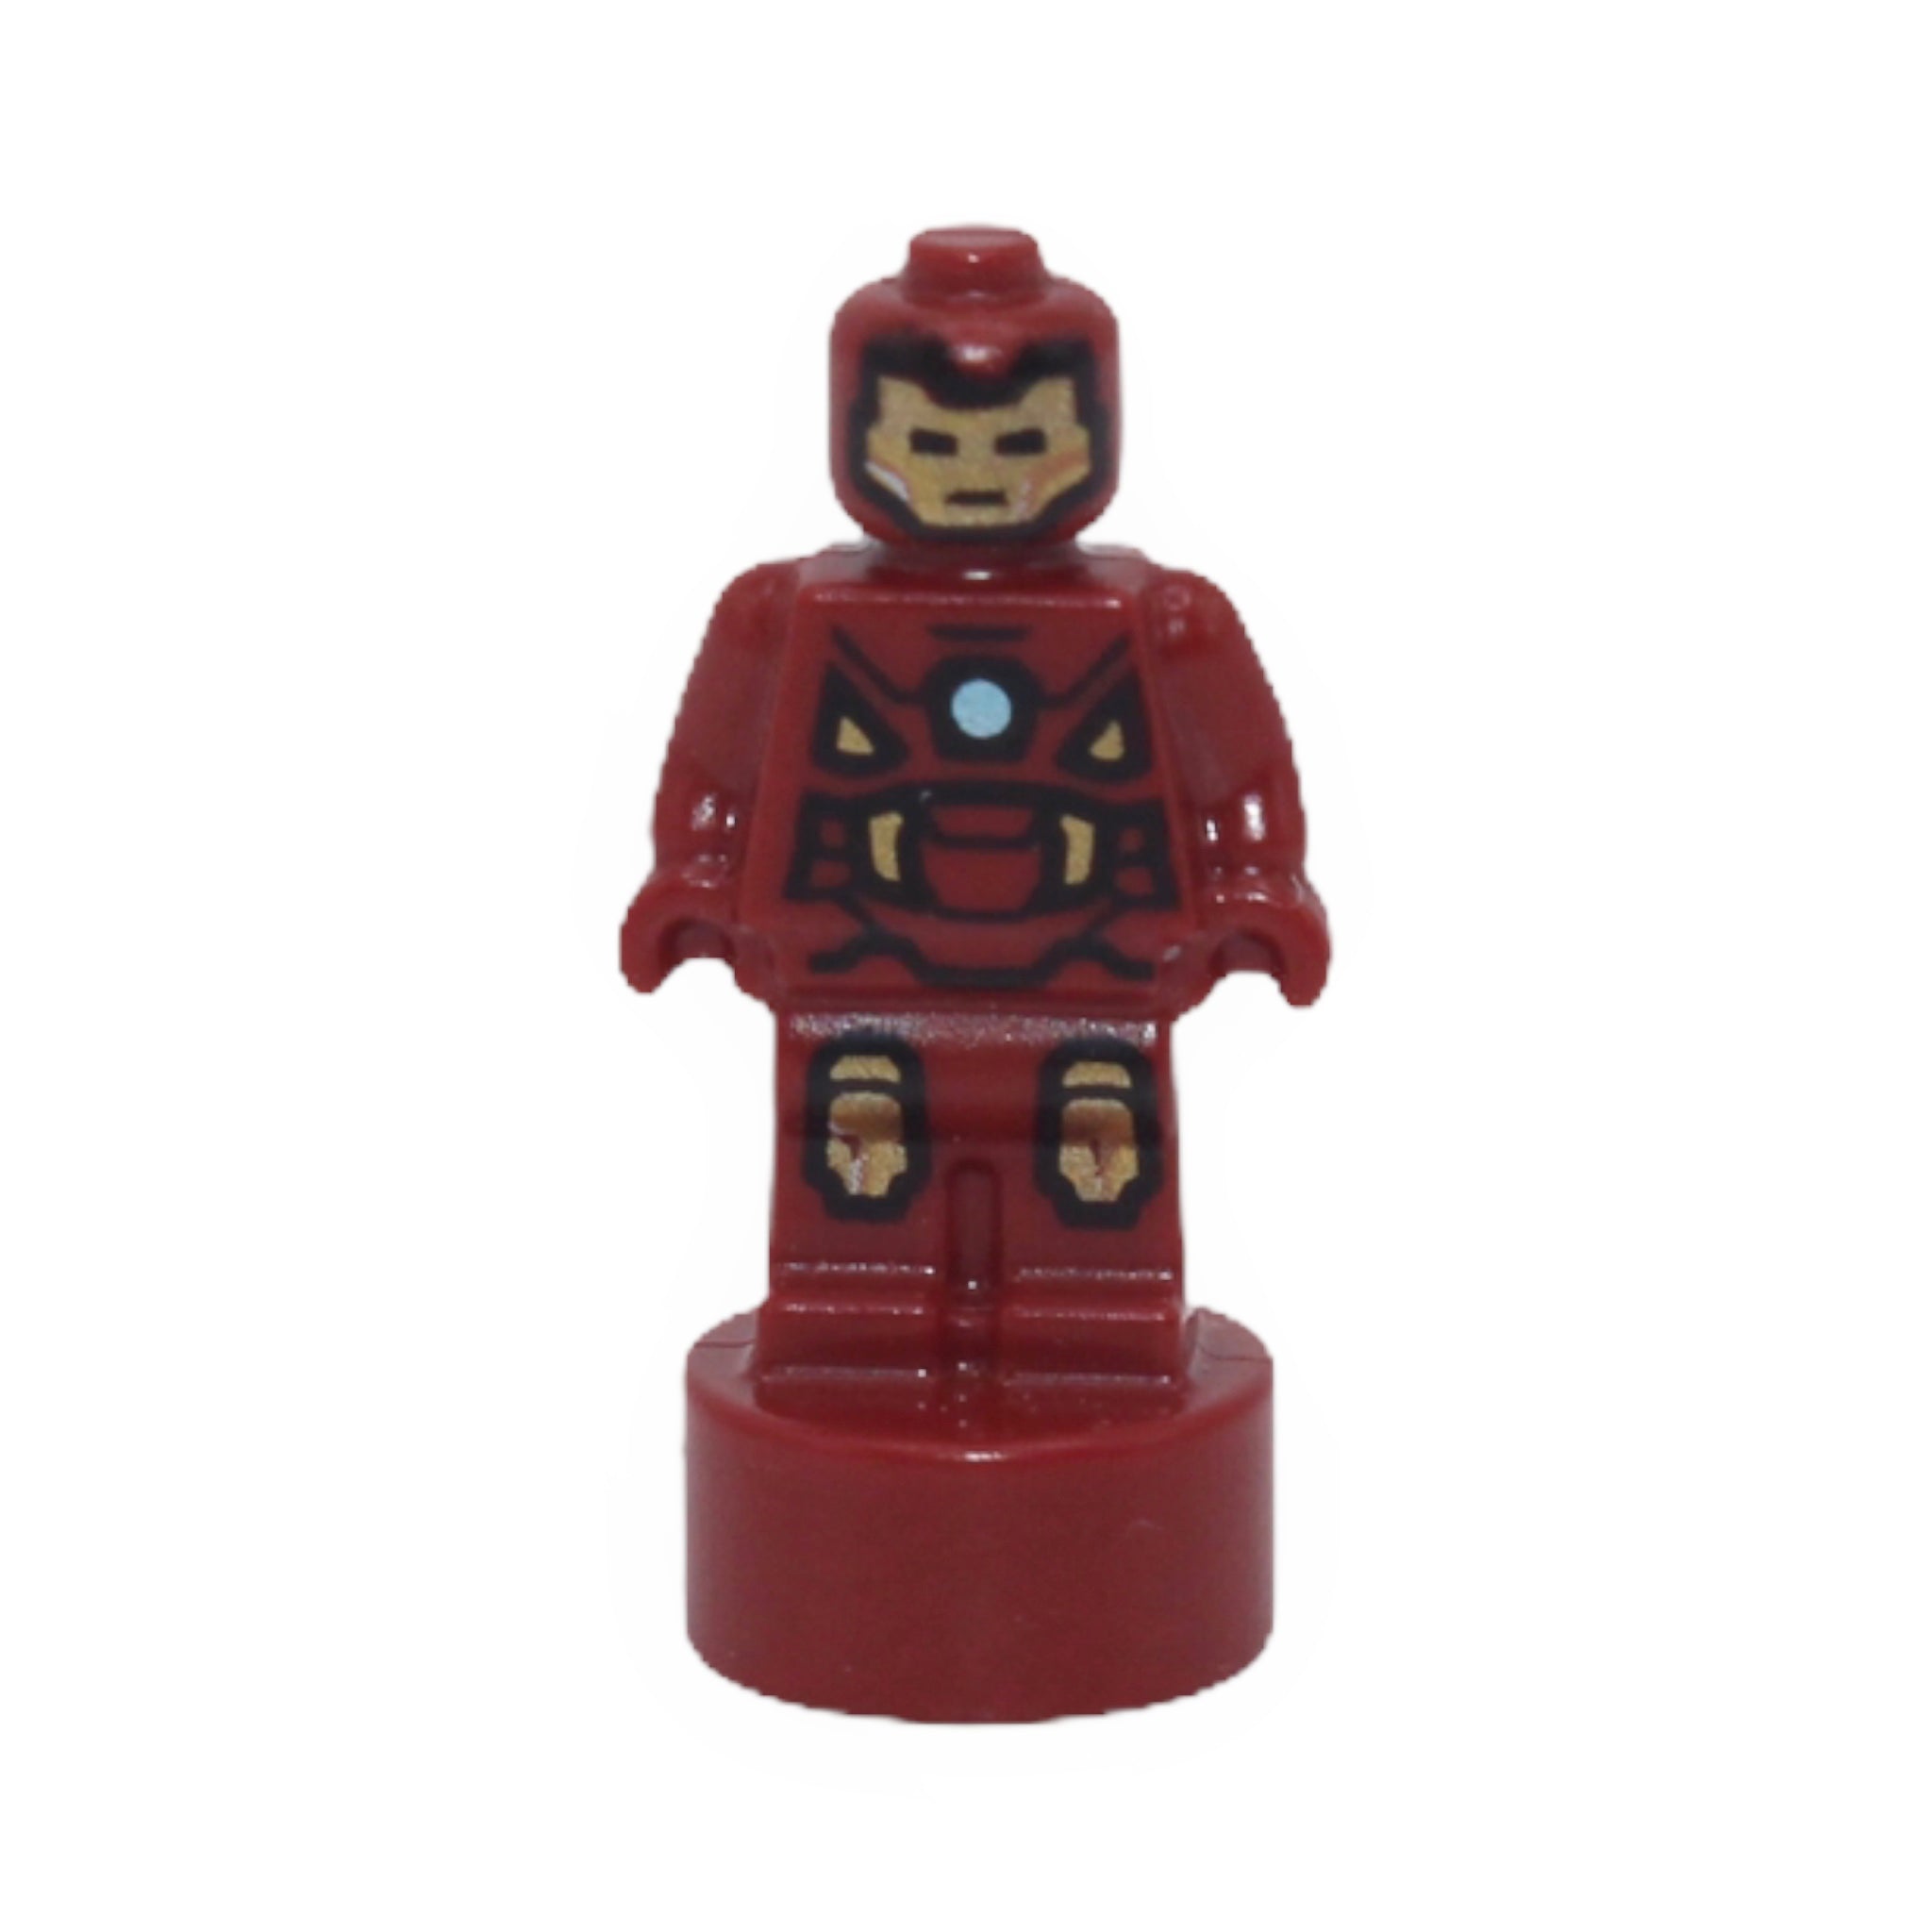 Iron Man microfigure (2020)